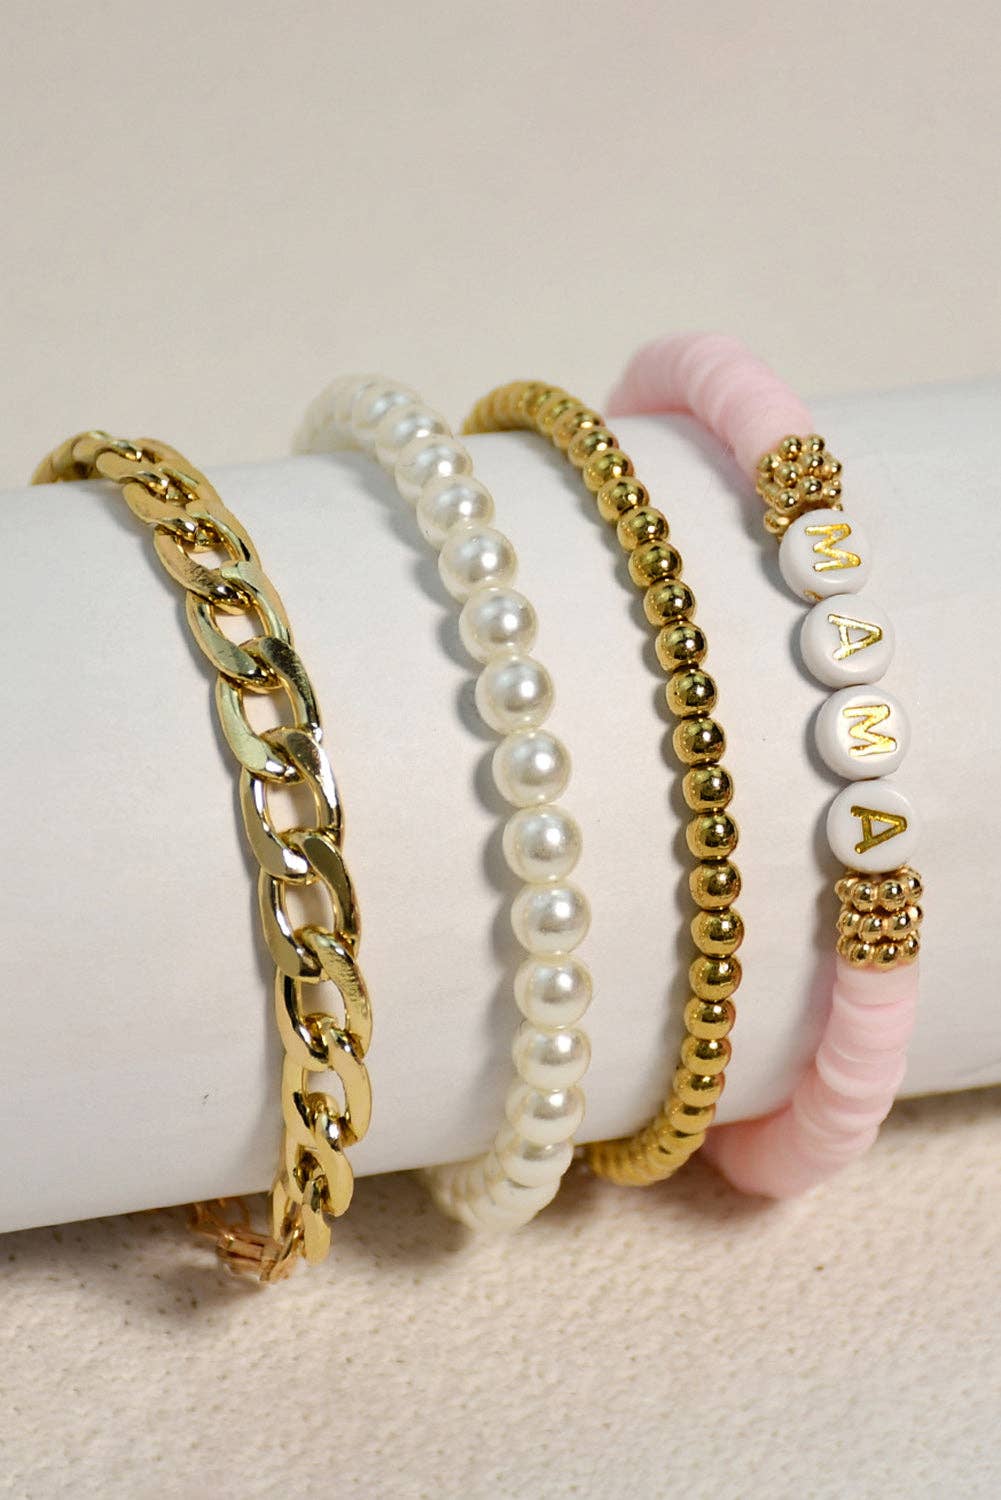 MAMA Pearls Beaded Chain Bracelets Set: